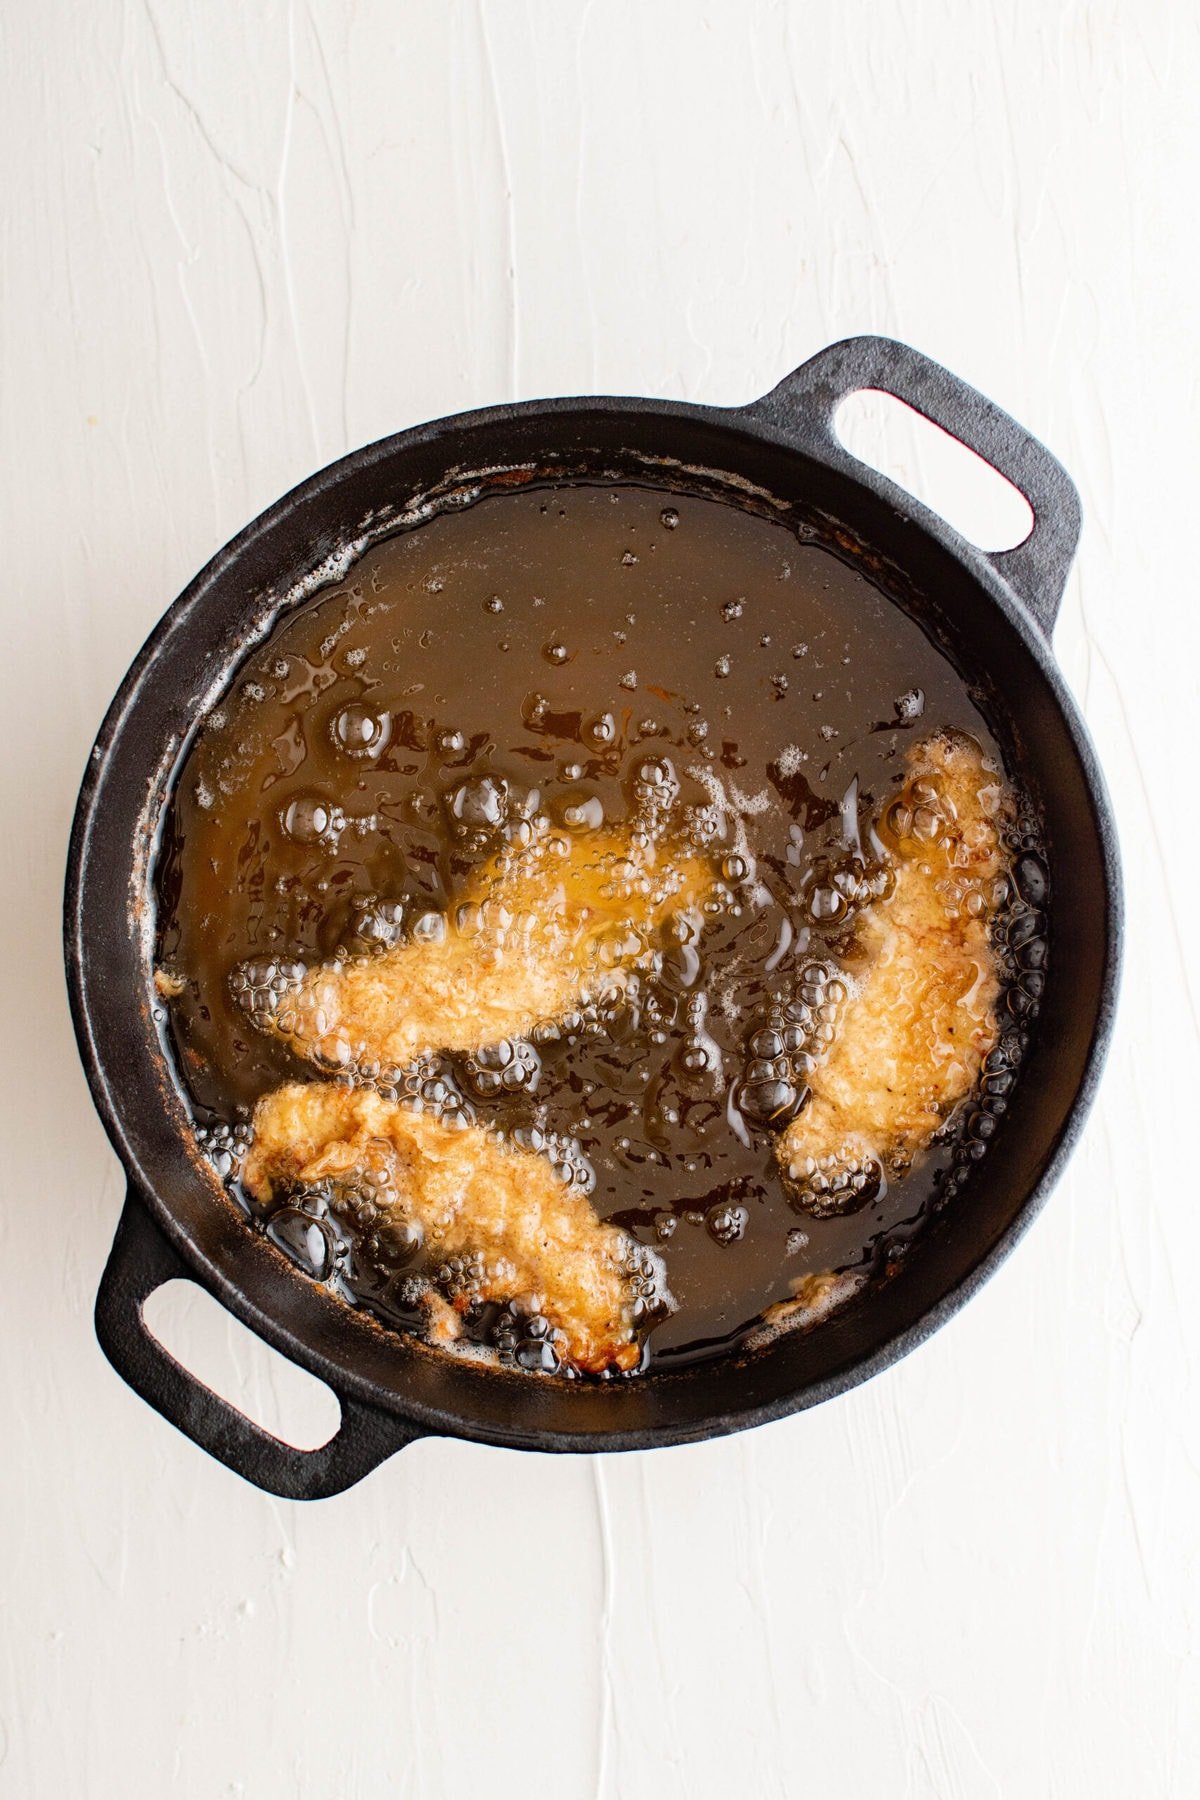 breaded chicken tender frying in oil in a cast iron skillet